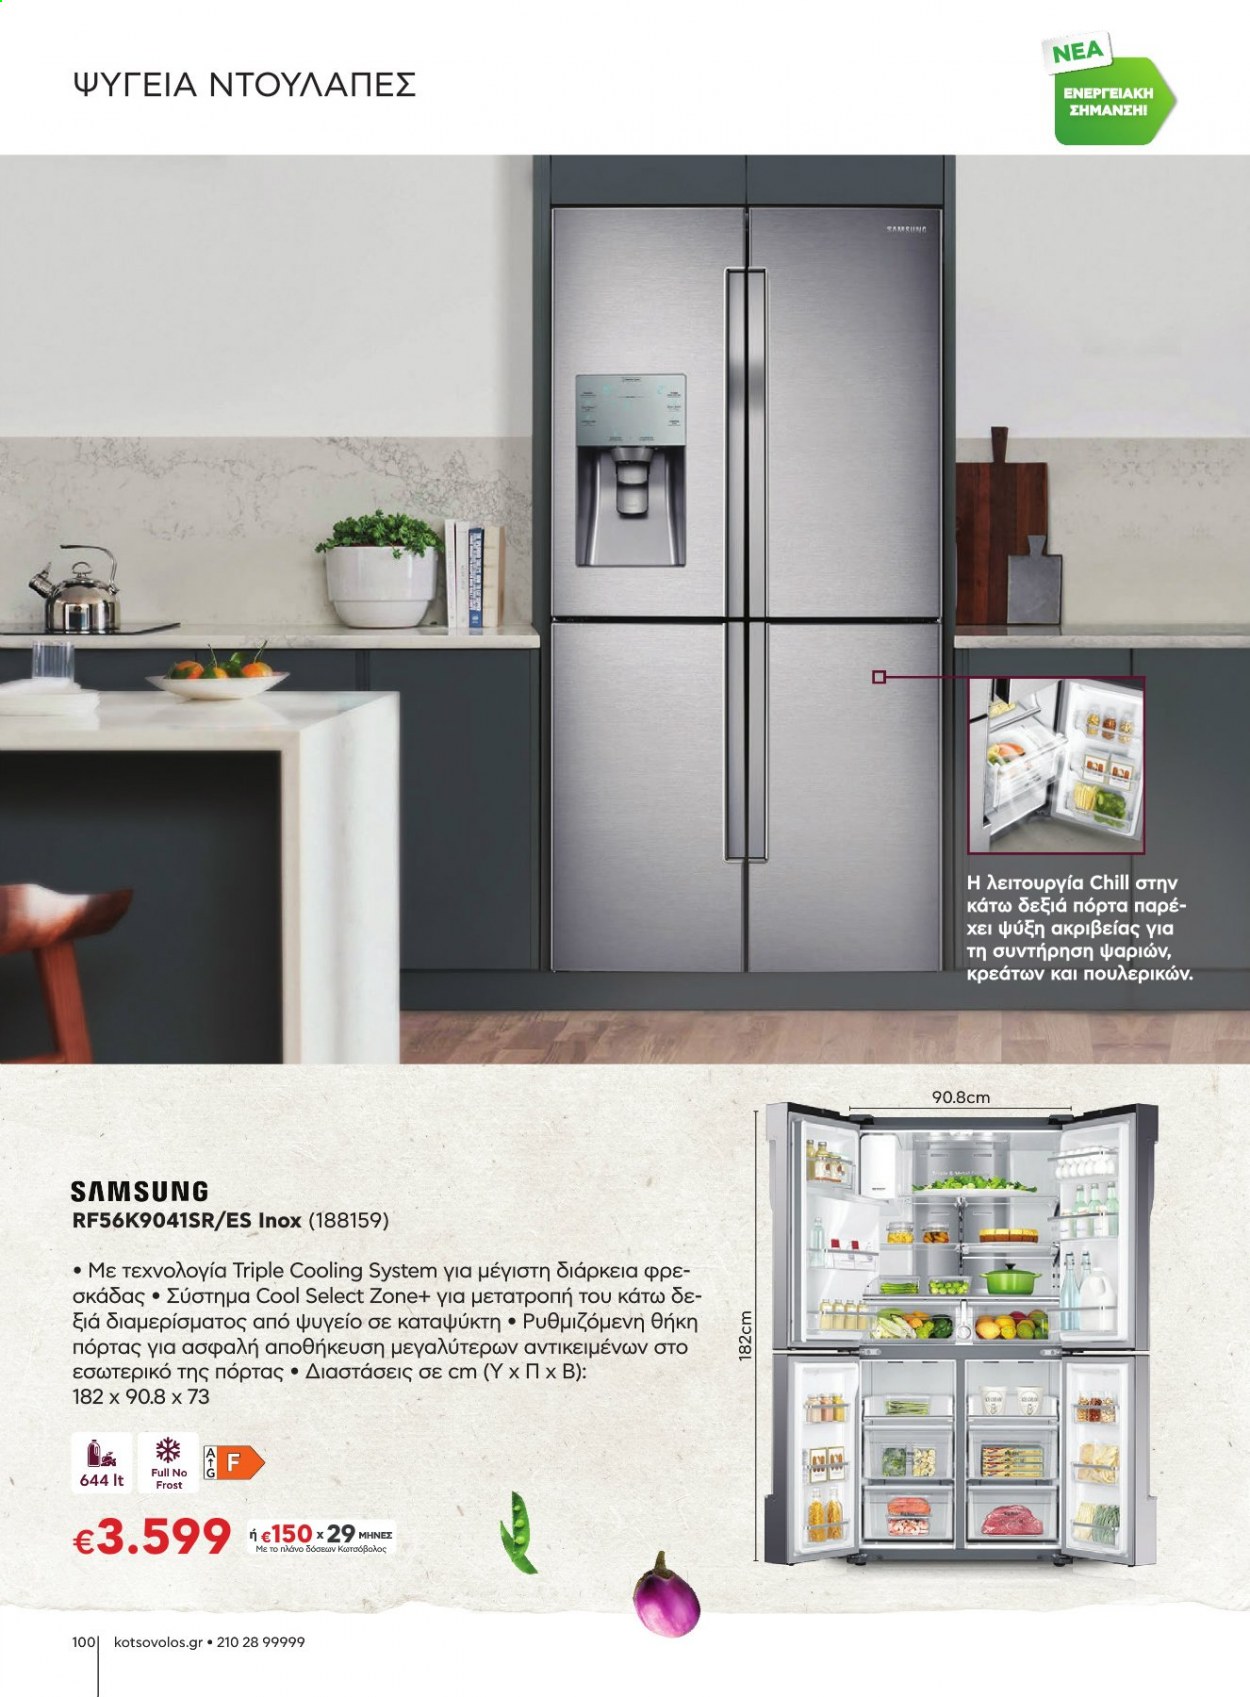 thumbnail - Φυλλάδια ΚΩΤΣΟΒΟΛΟΣ - Εκπτωτικά προϊόντα - Samsung, καταψύκτη, ψυγείο. Σελίδα 100.